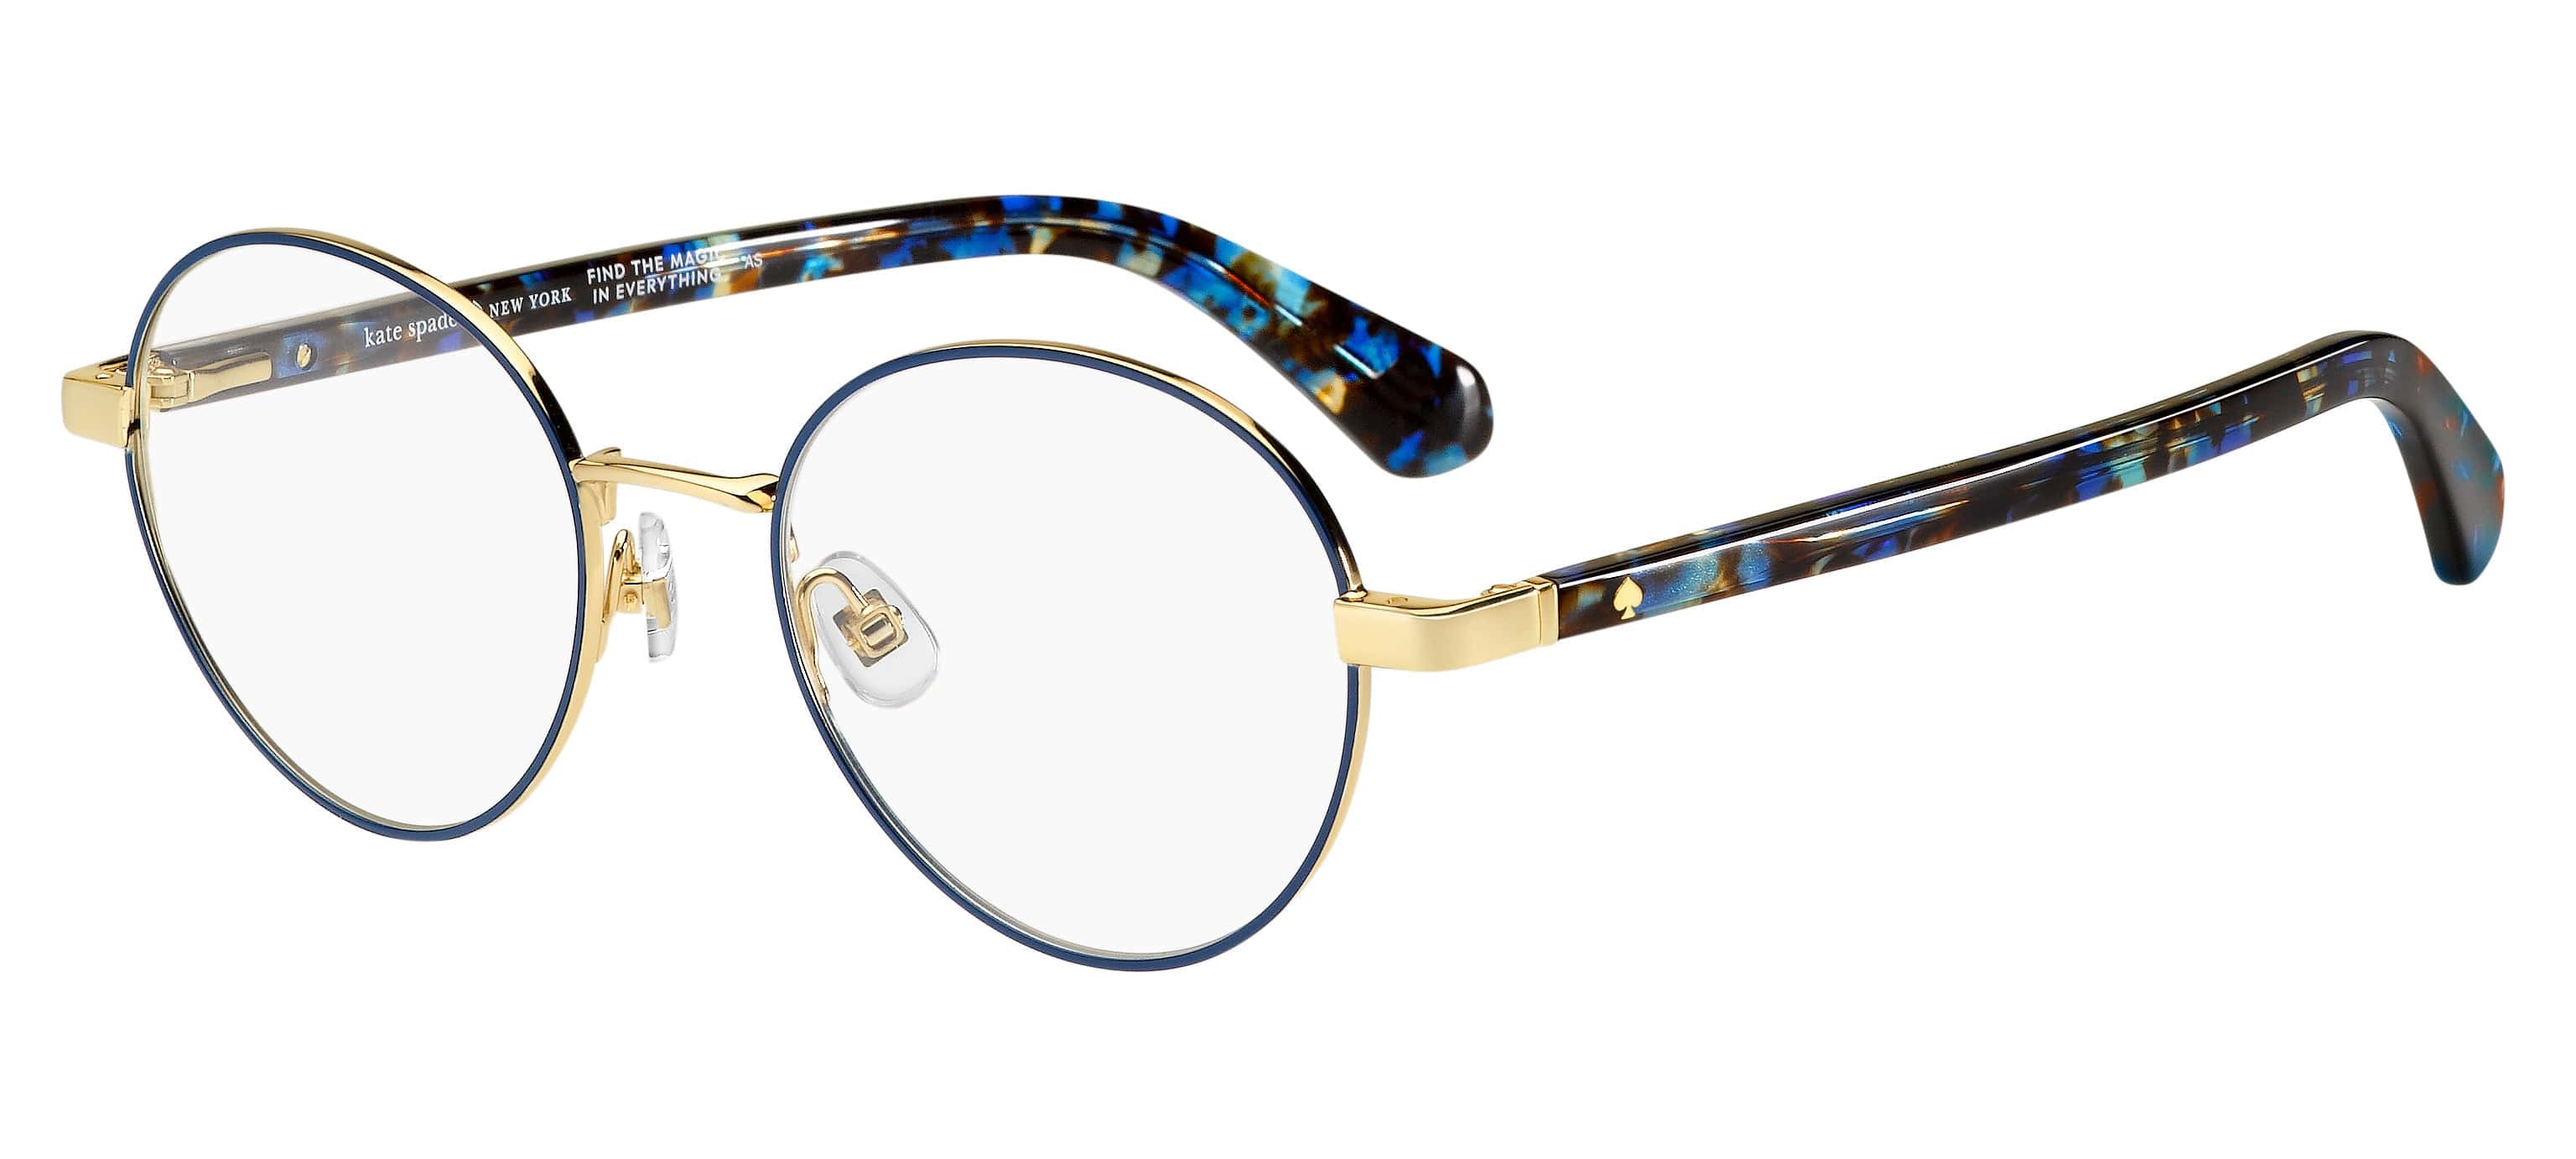 Kate Spade MARCIANN LKS Glasses Frames Ausralia 1001 Optical